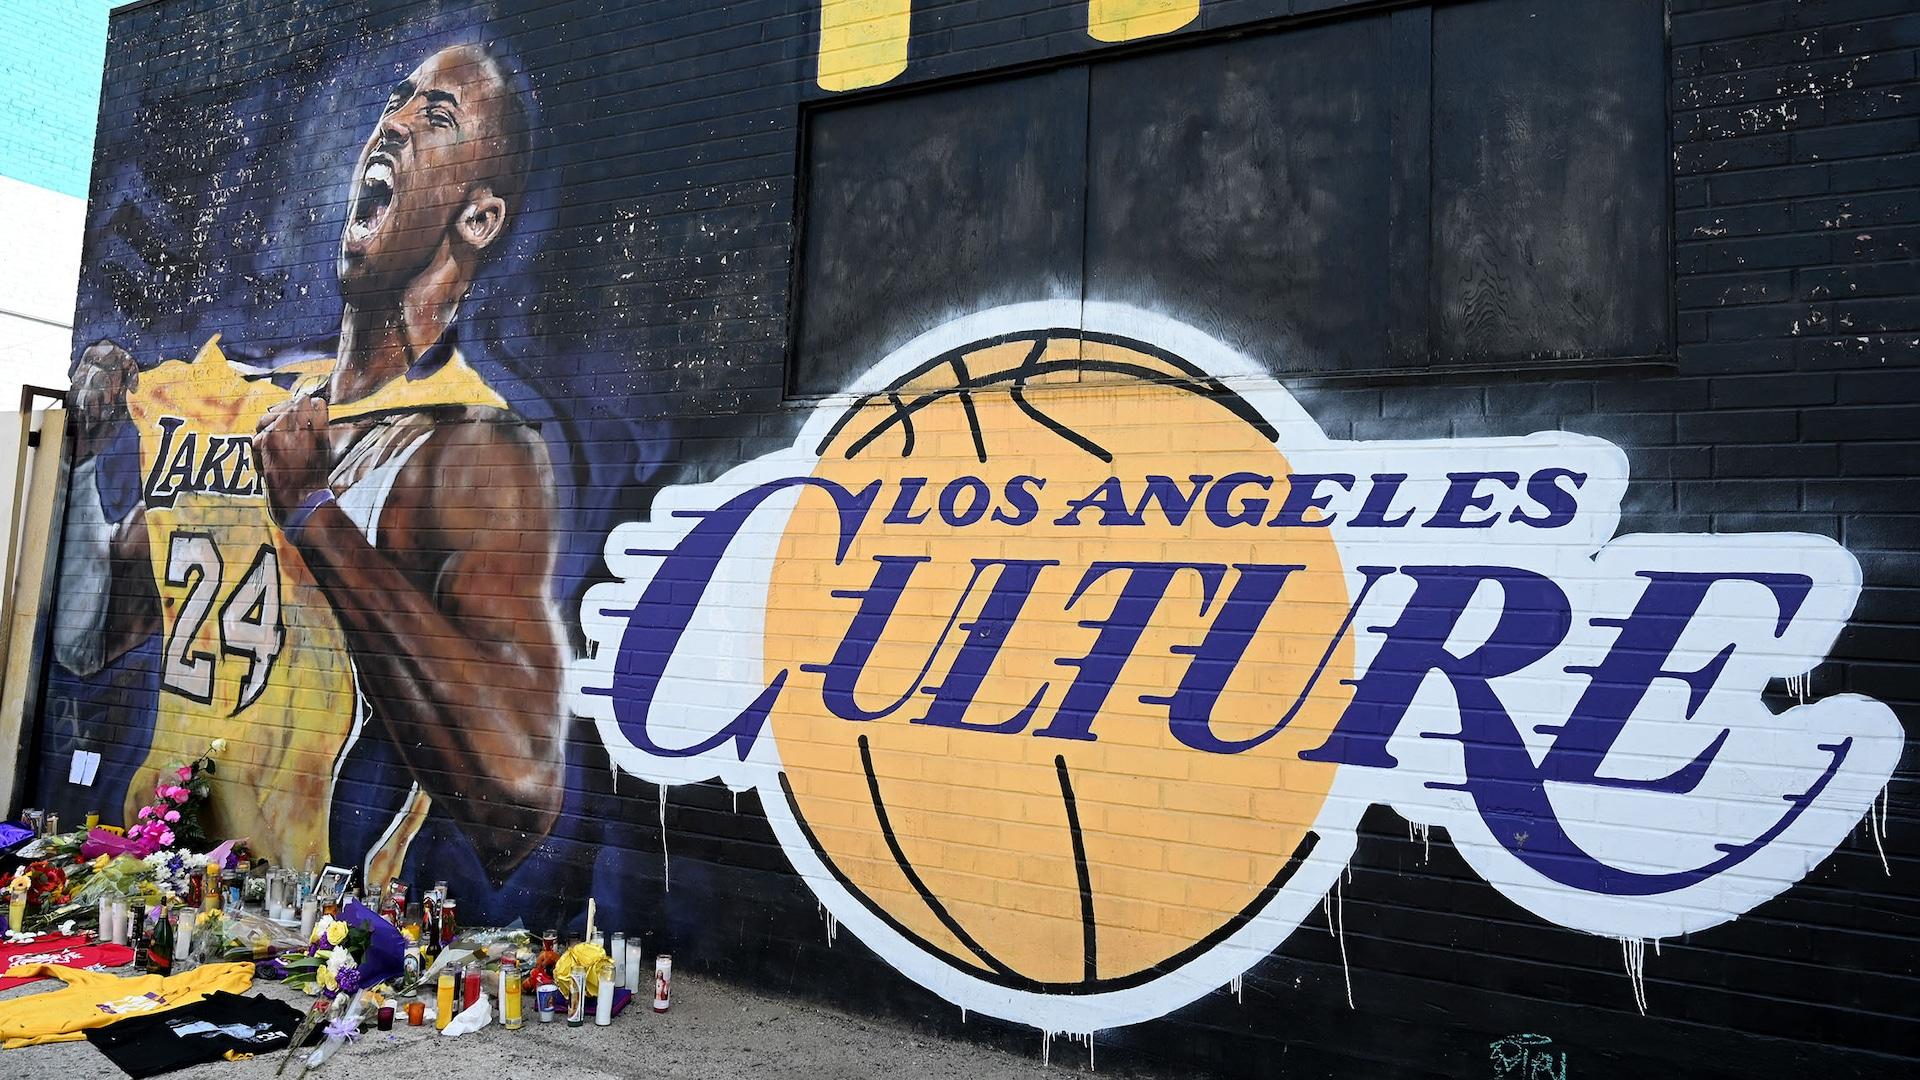 Kobe Bryant's relentless determination resonated throughout Los